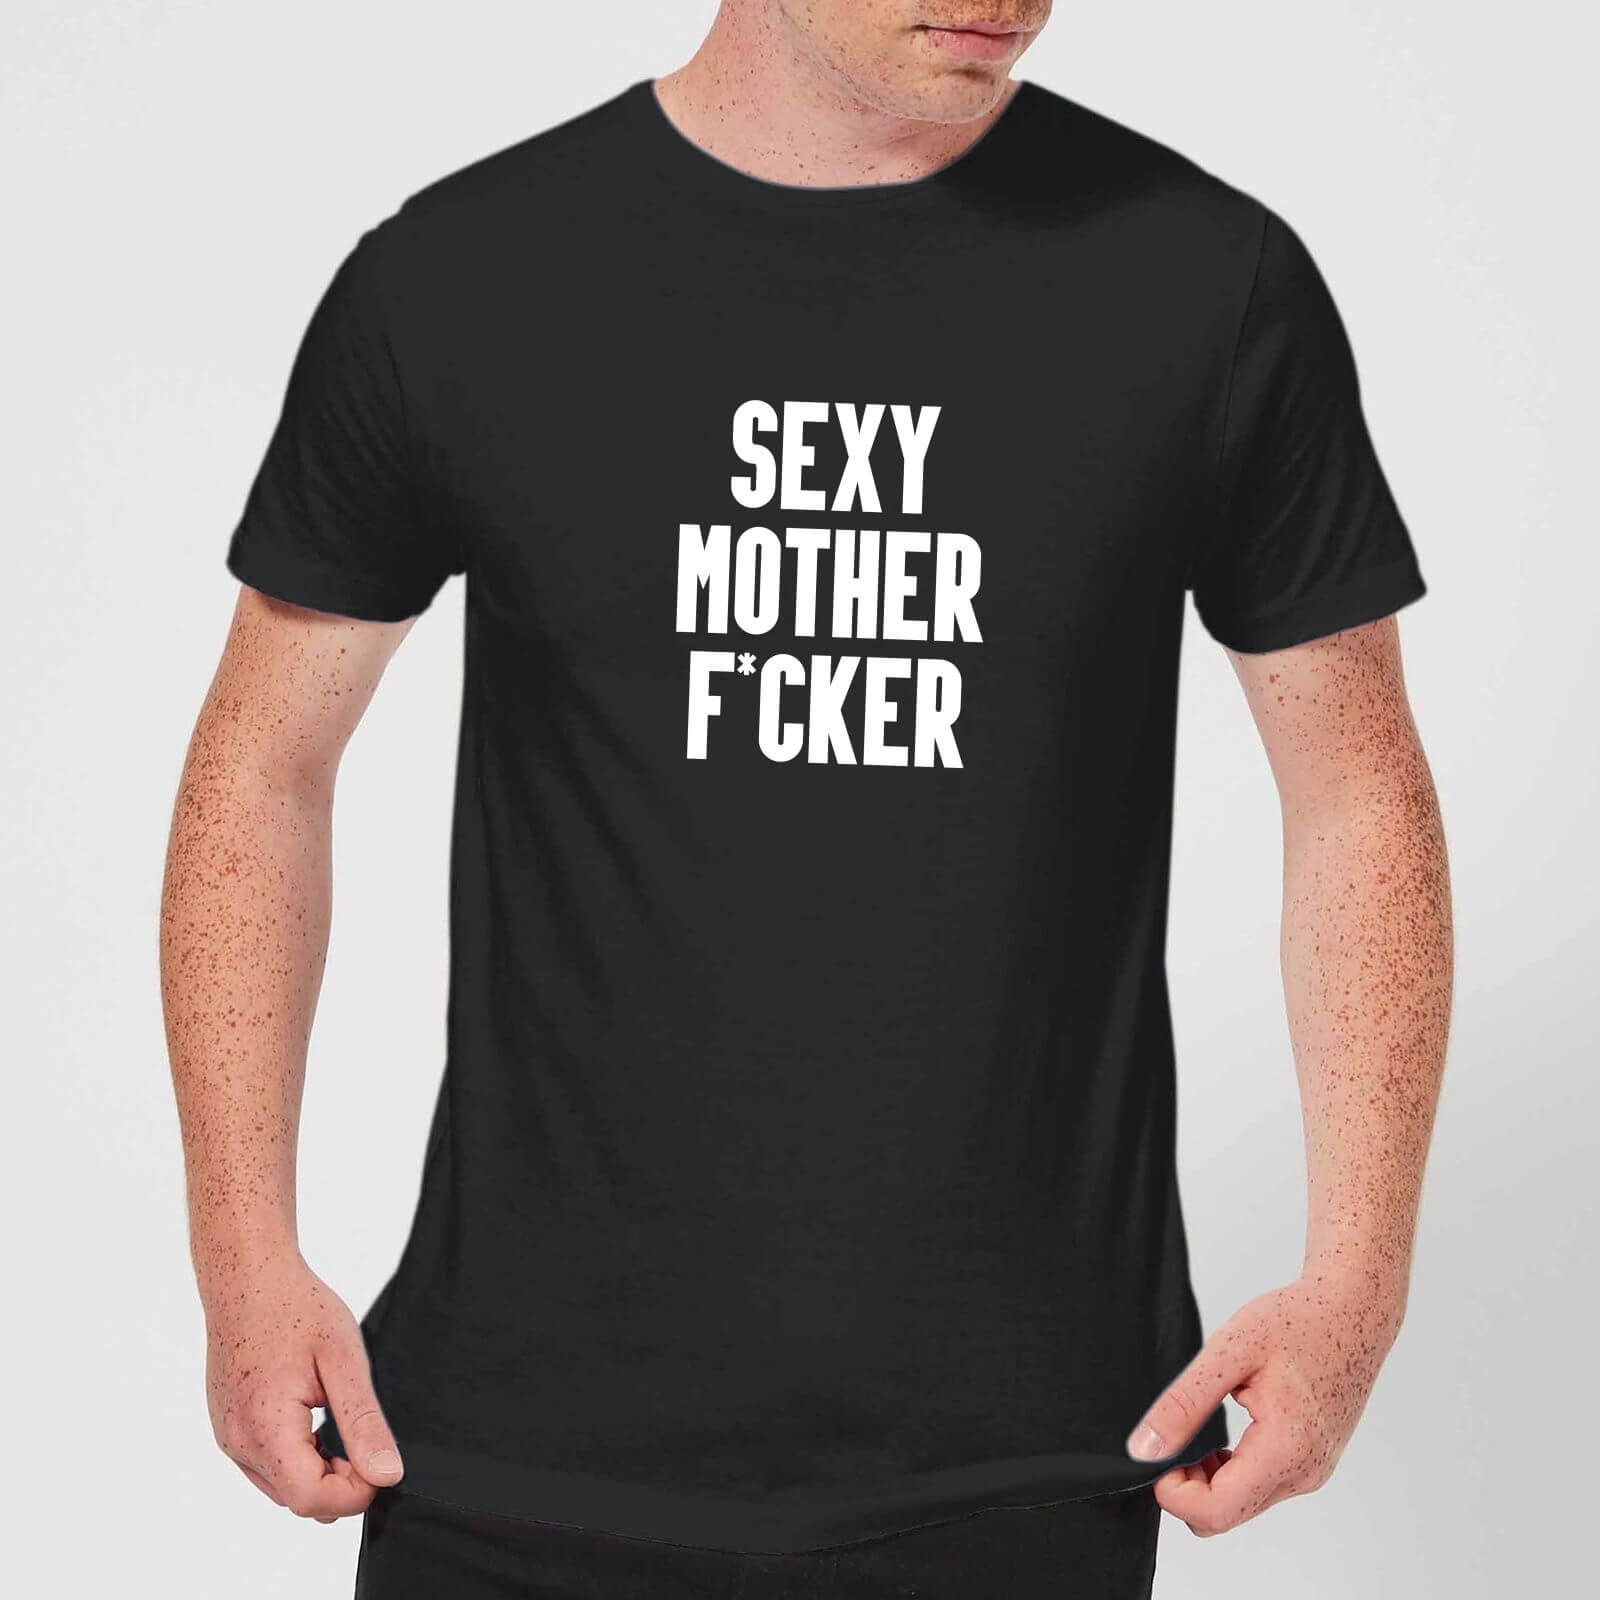 Sexy Mother F*cker Men's T-Shirt - Black - S - Black